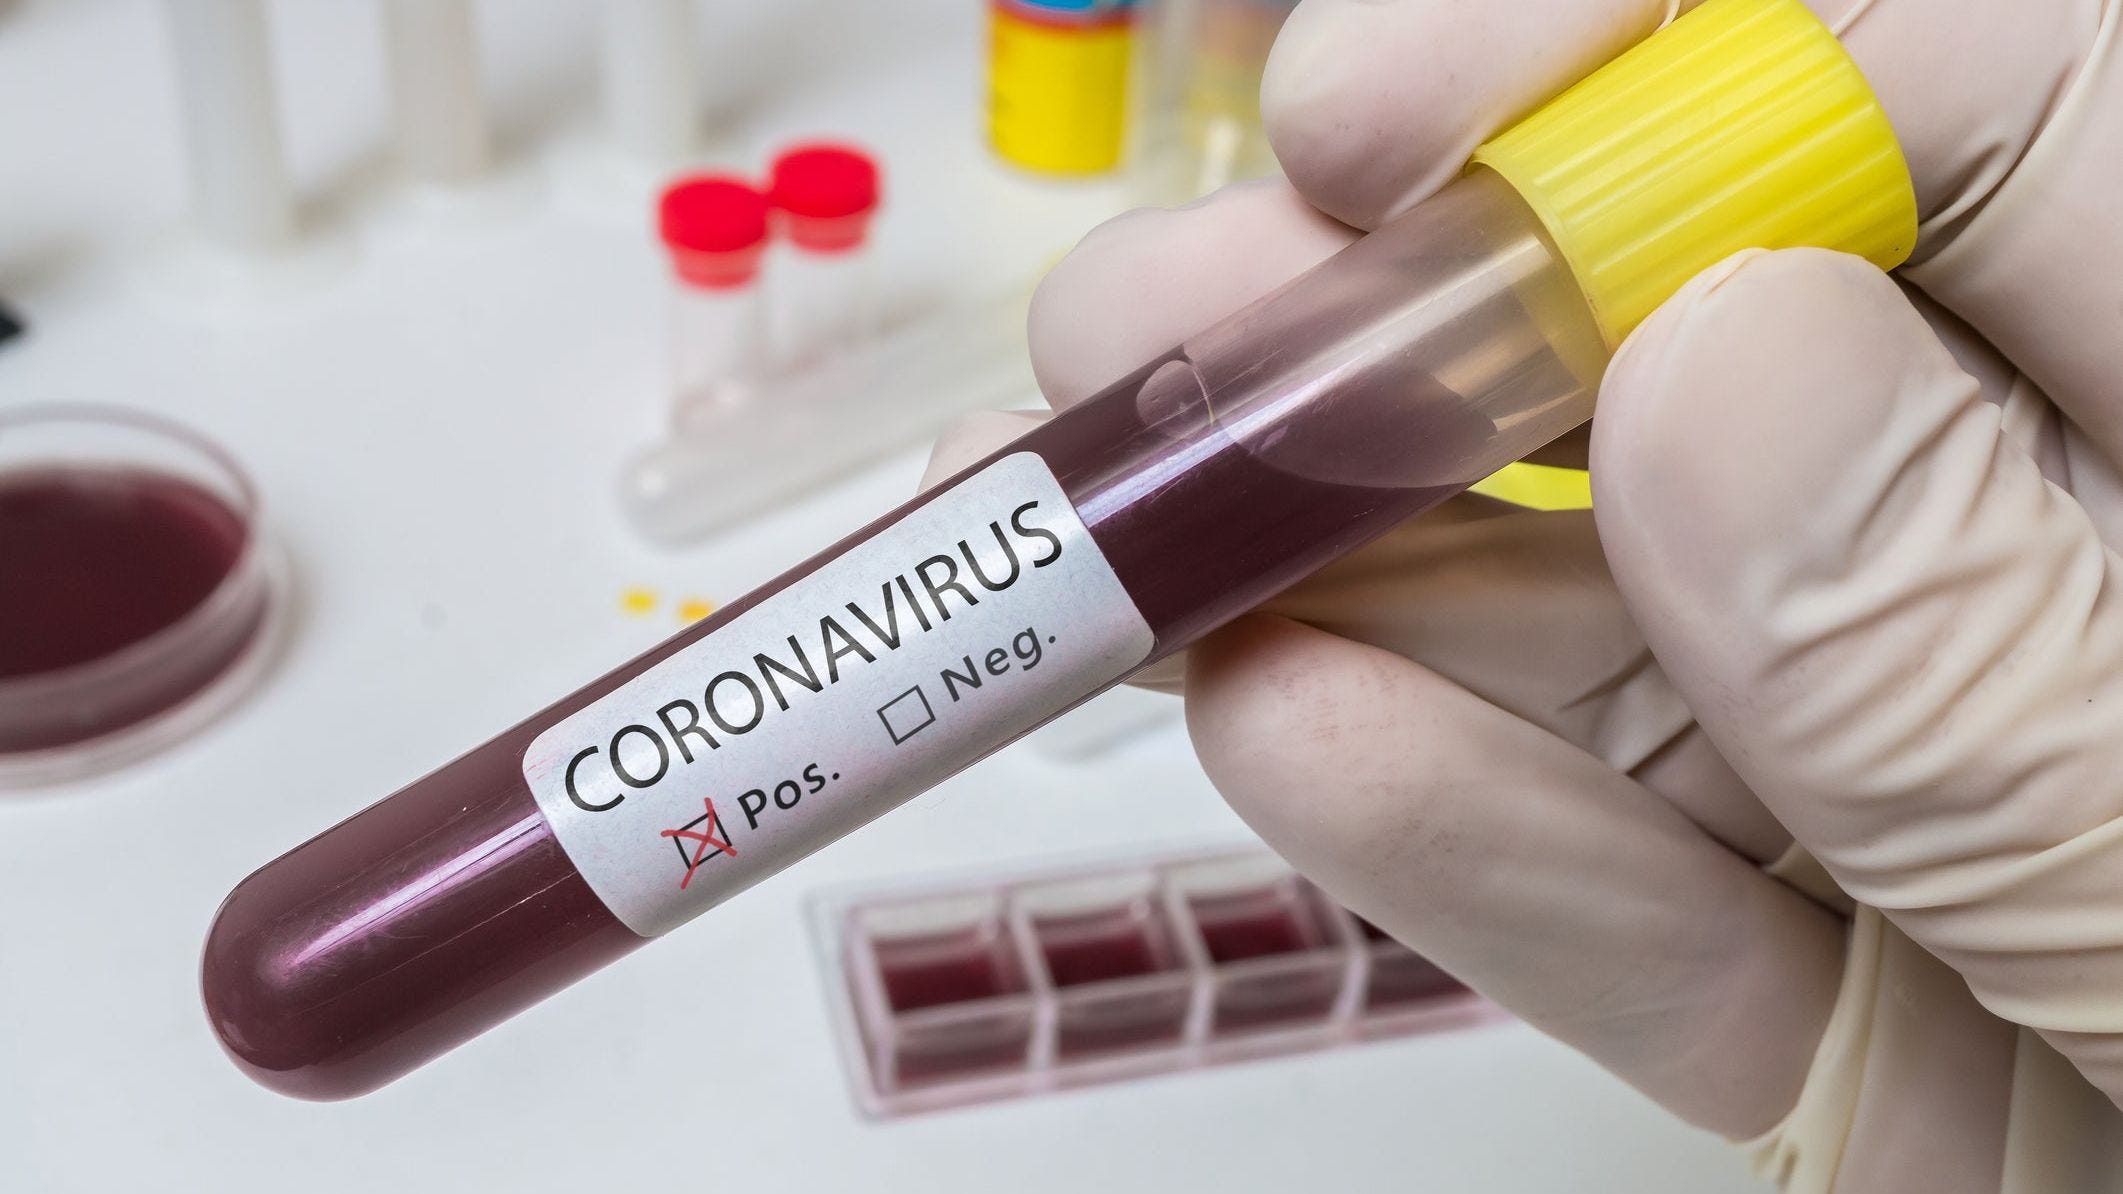 Experimental coronavirus drug remdesivir to be distributed again after halt a week ago